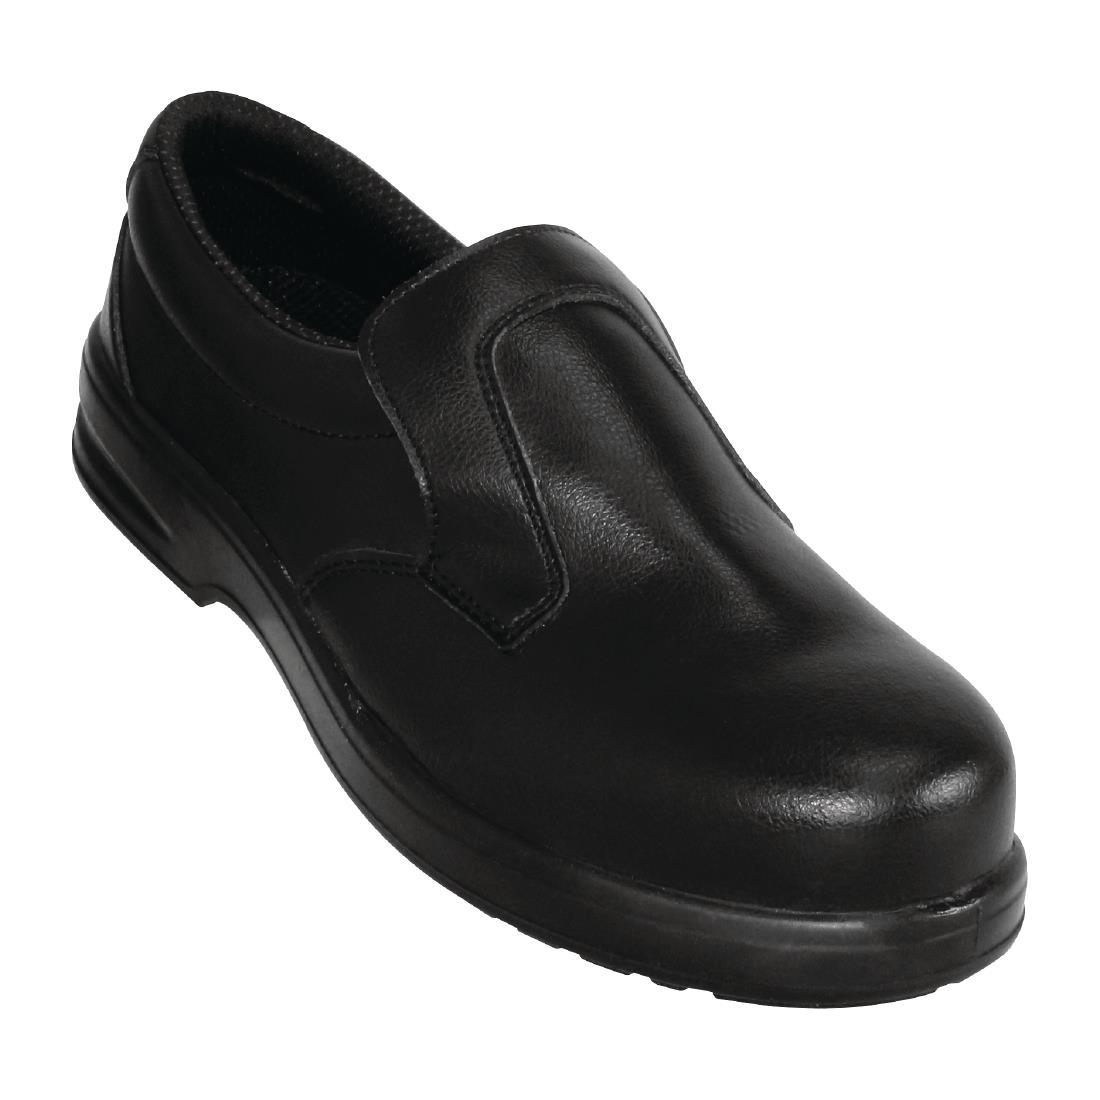 Slipbuster Lite Slip On Safety Shoes Black 39 - A845-39  - 2